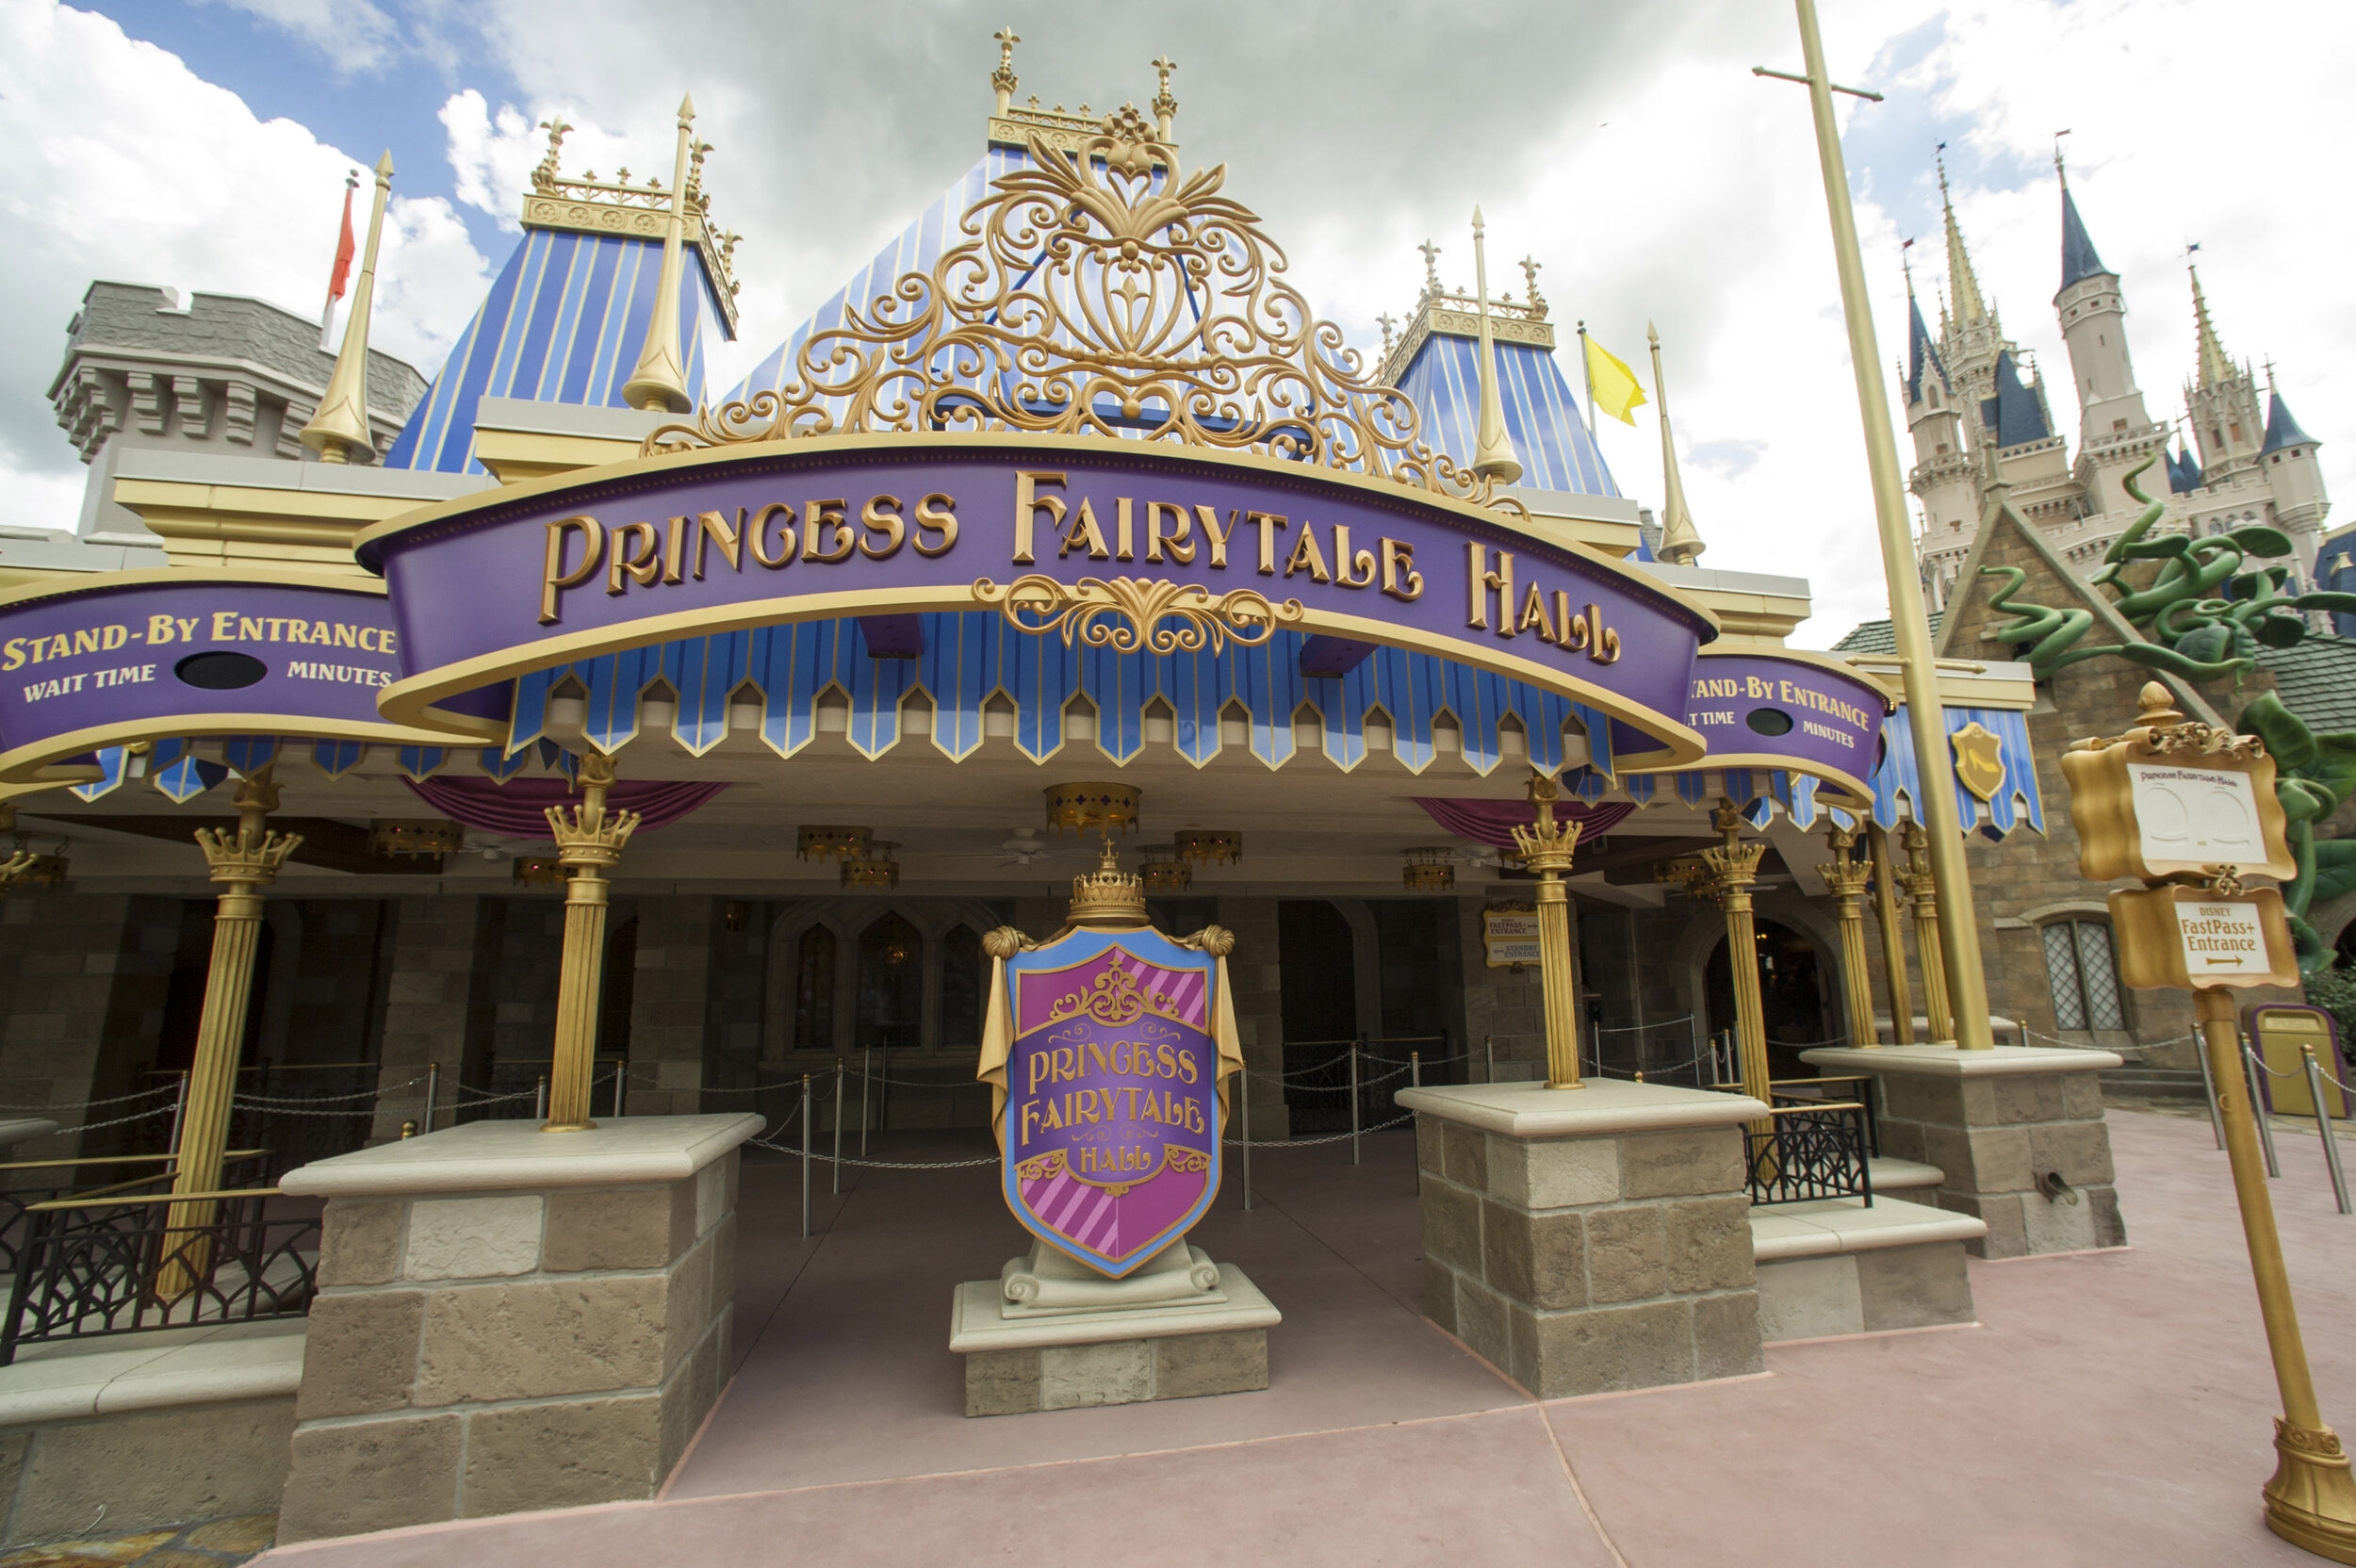  Princess Fairytale Hall Photo courtesy of Disney 